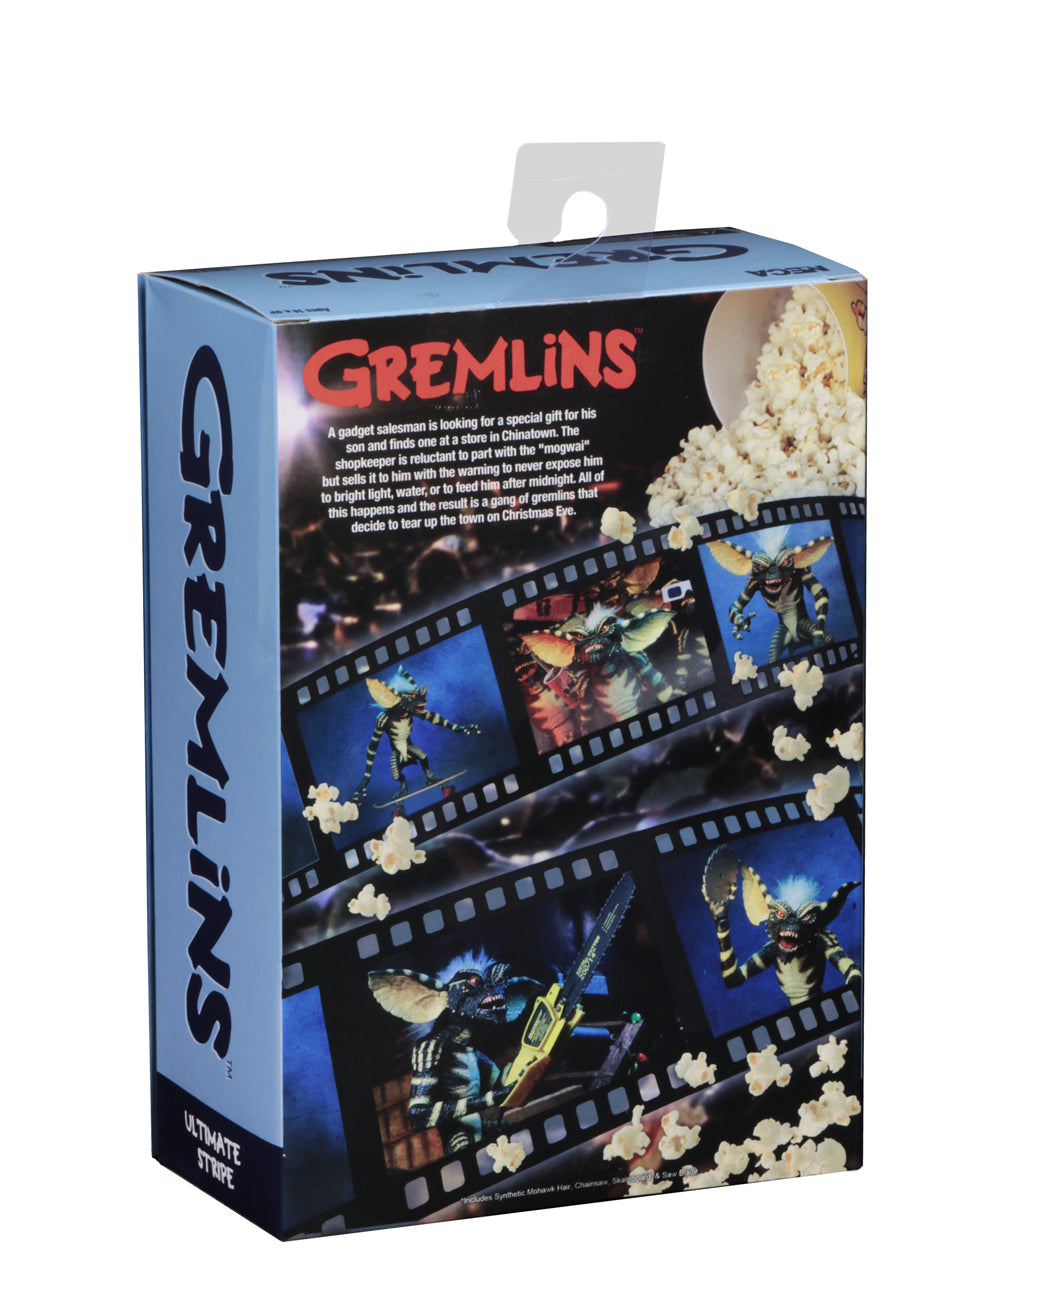 NECA - Gremlins - Ultimate Stripe 7" Action Figure - Zlc Collectibles